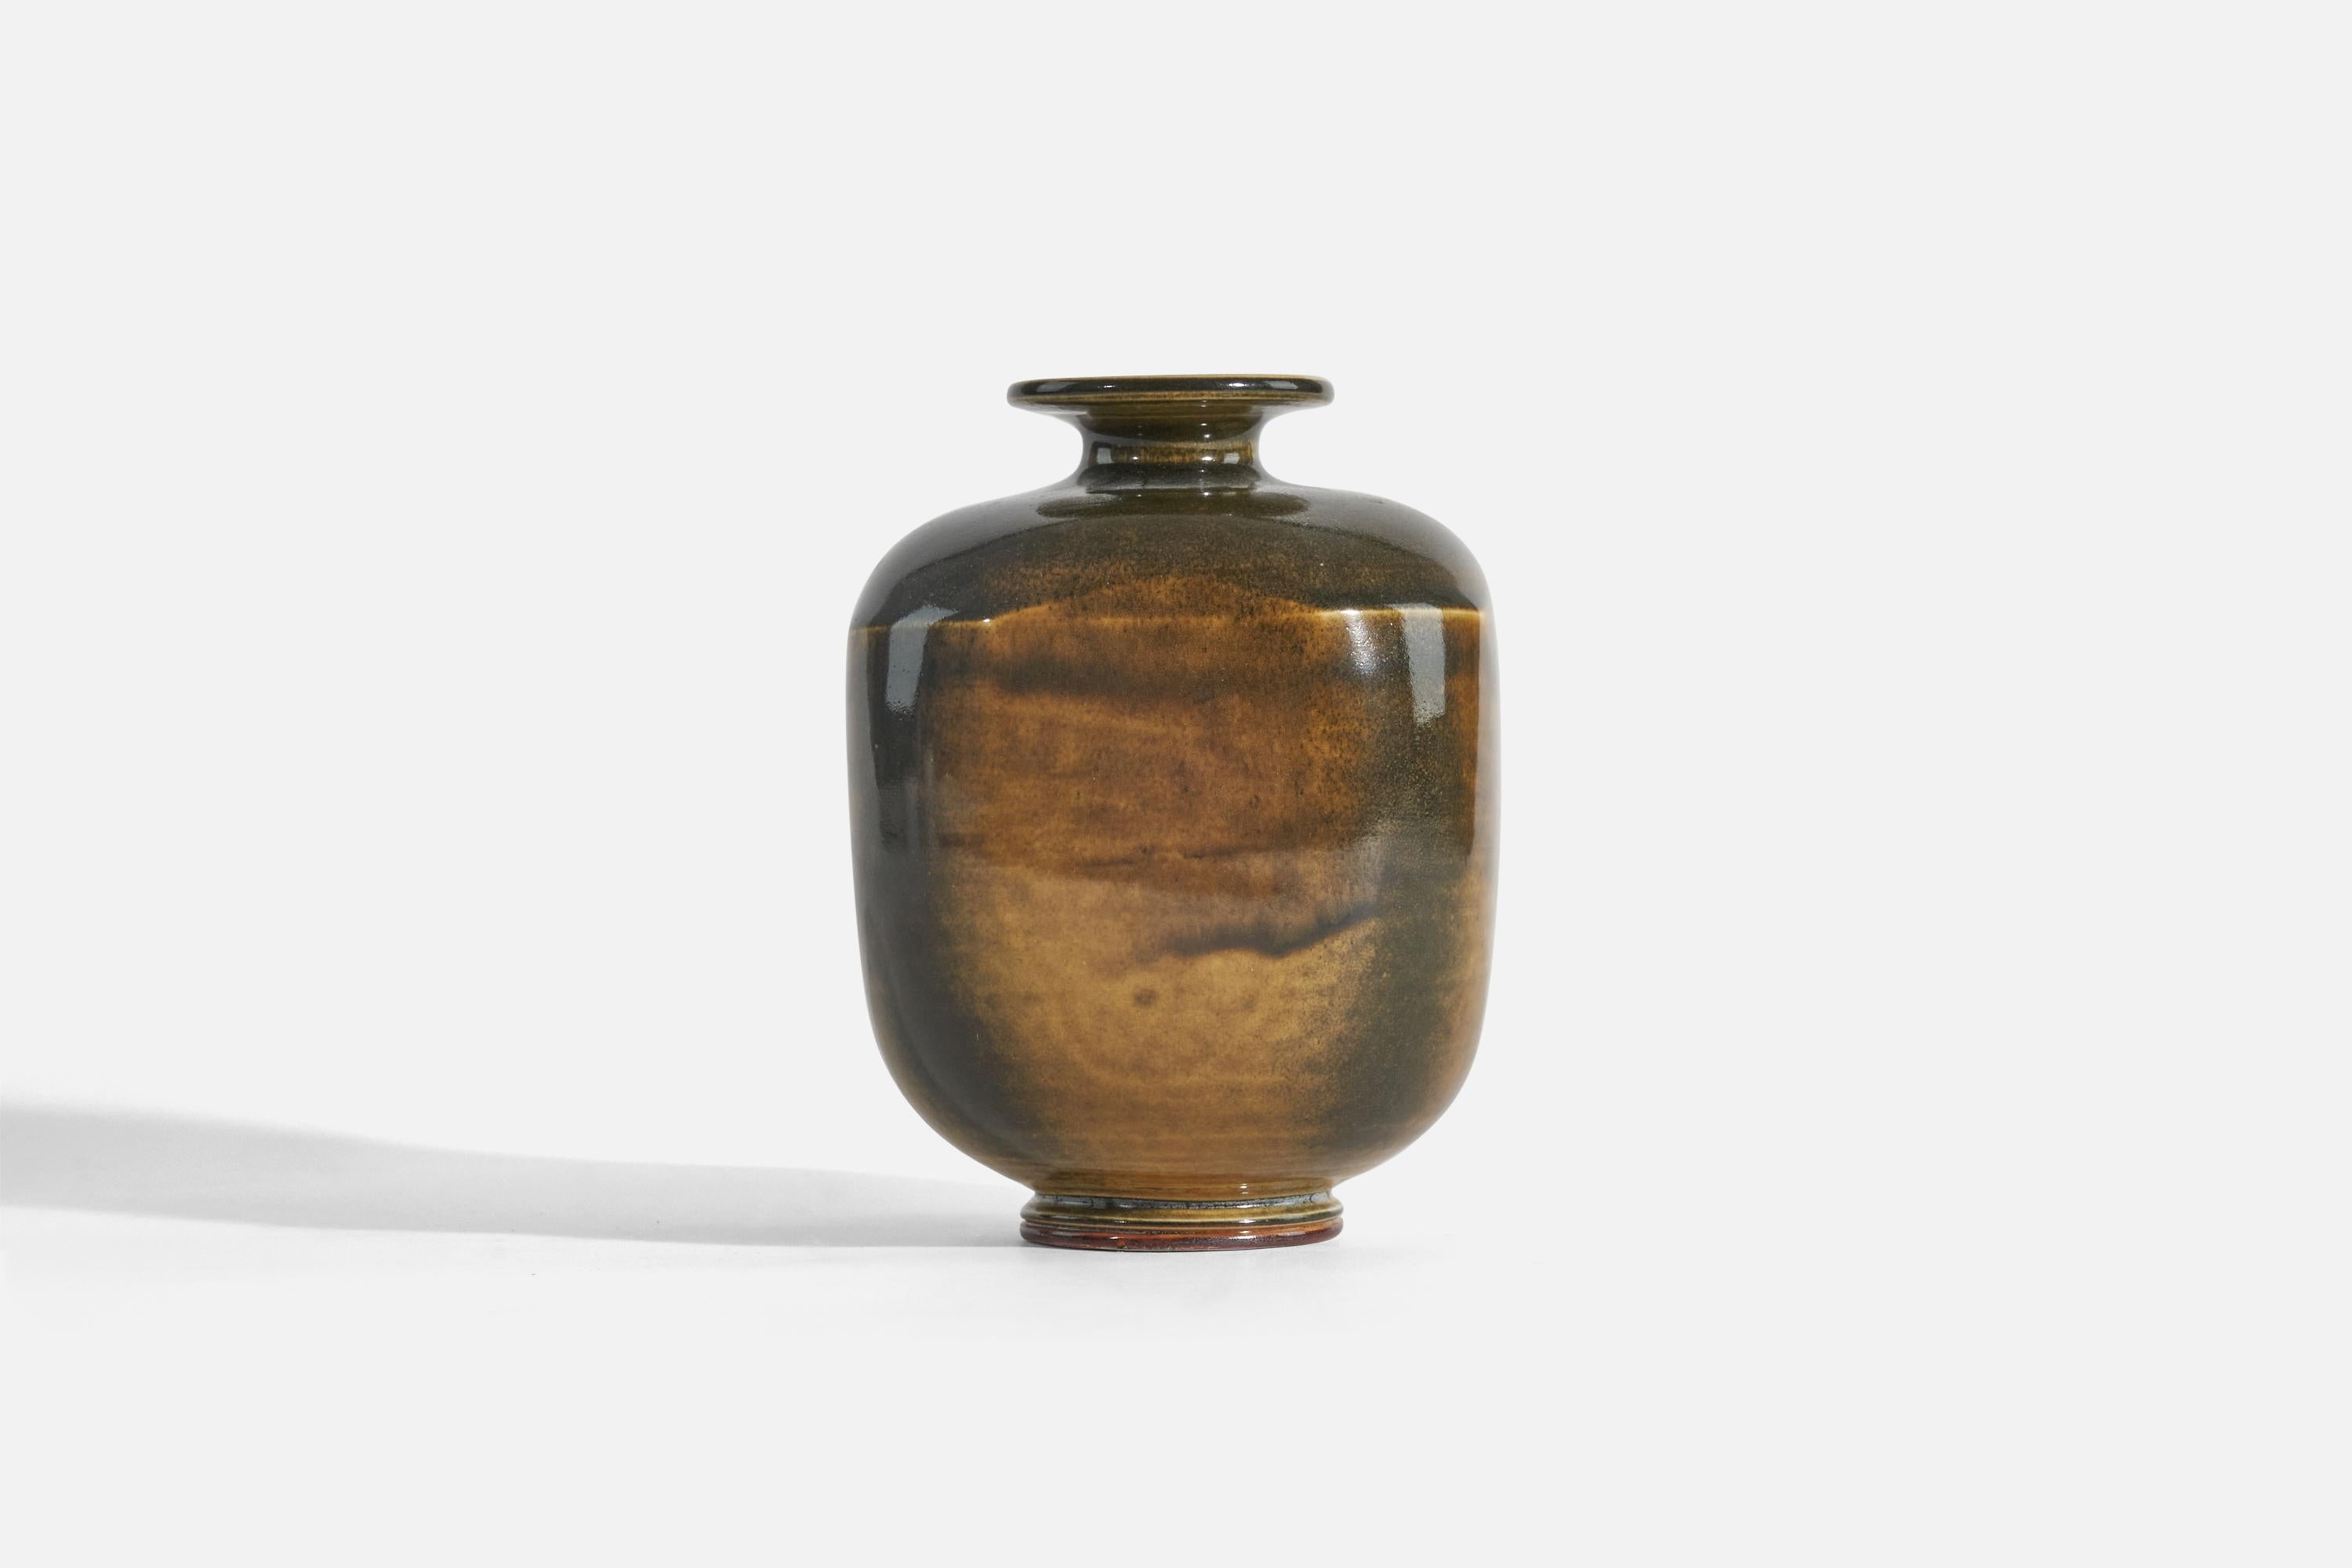 A black and brown-glazed stoneware vase designed by Berndt Friberg and produced by Gustavsberg, Sweden, 1976.

